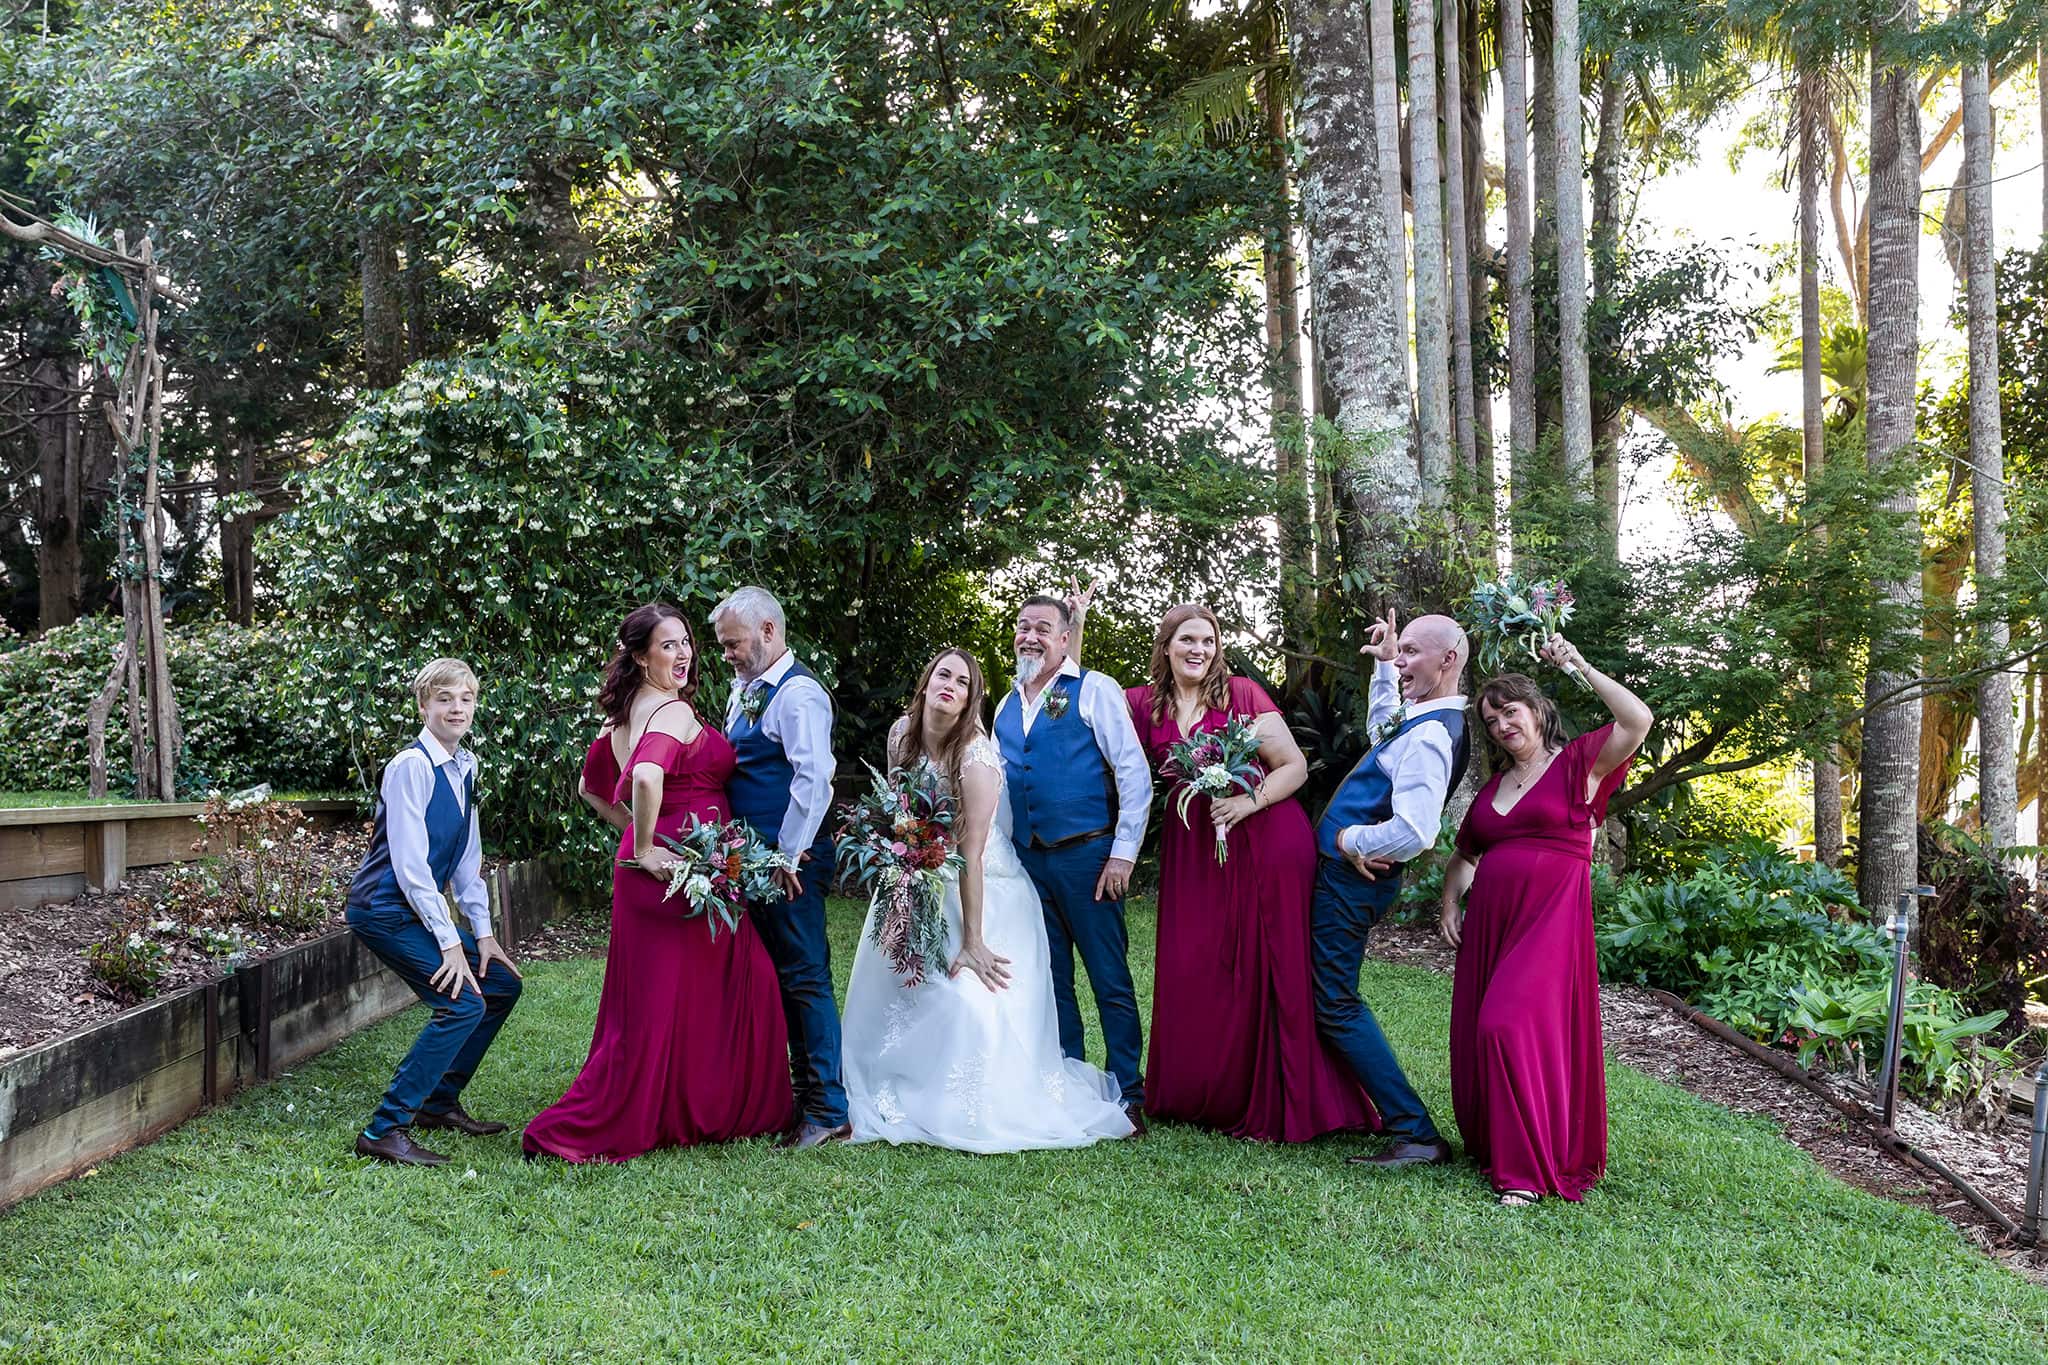 Bridal wedding party at St Bernard's Hotel, Tamborine Mountain by Bec Pattinson Photography